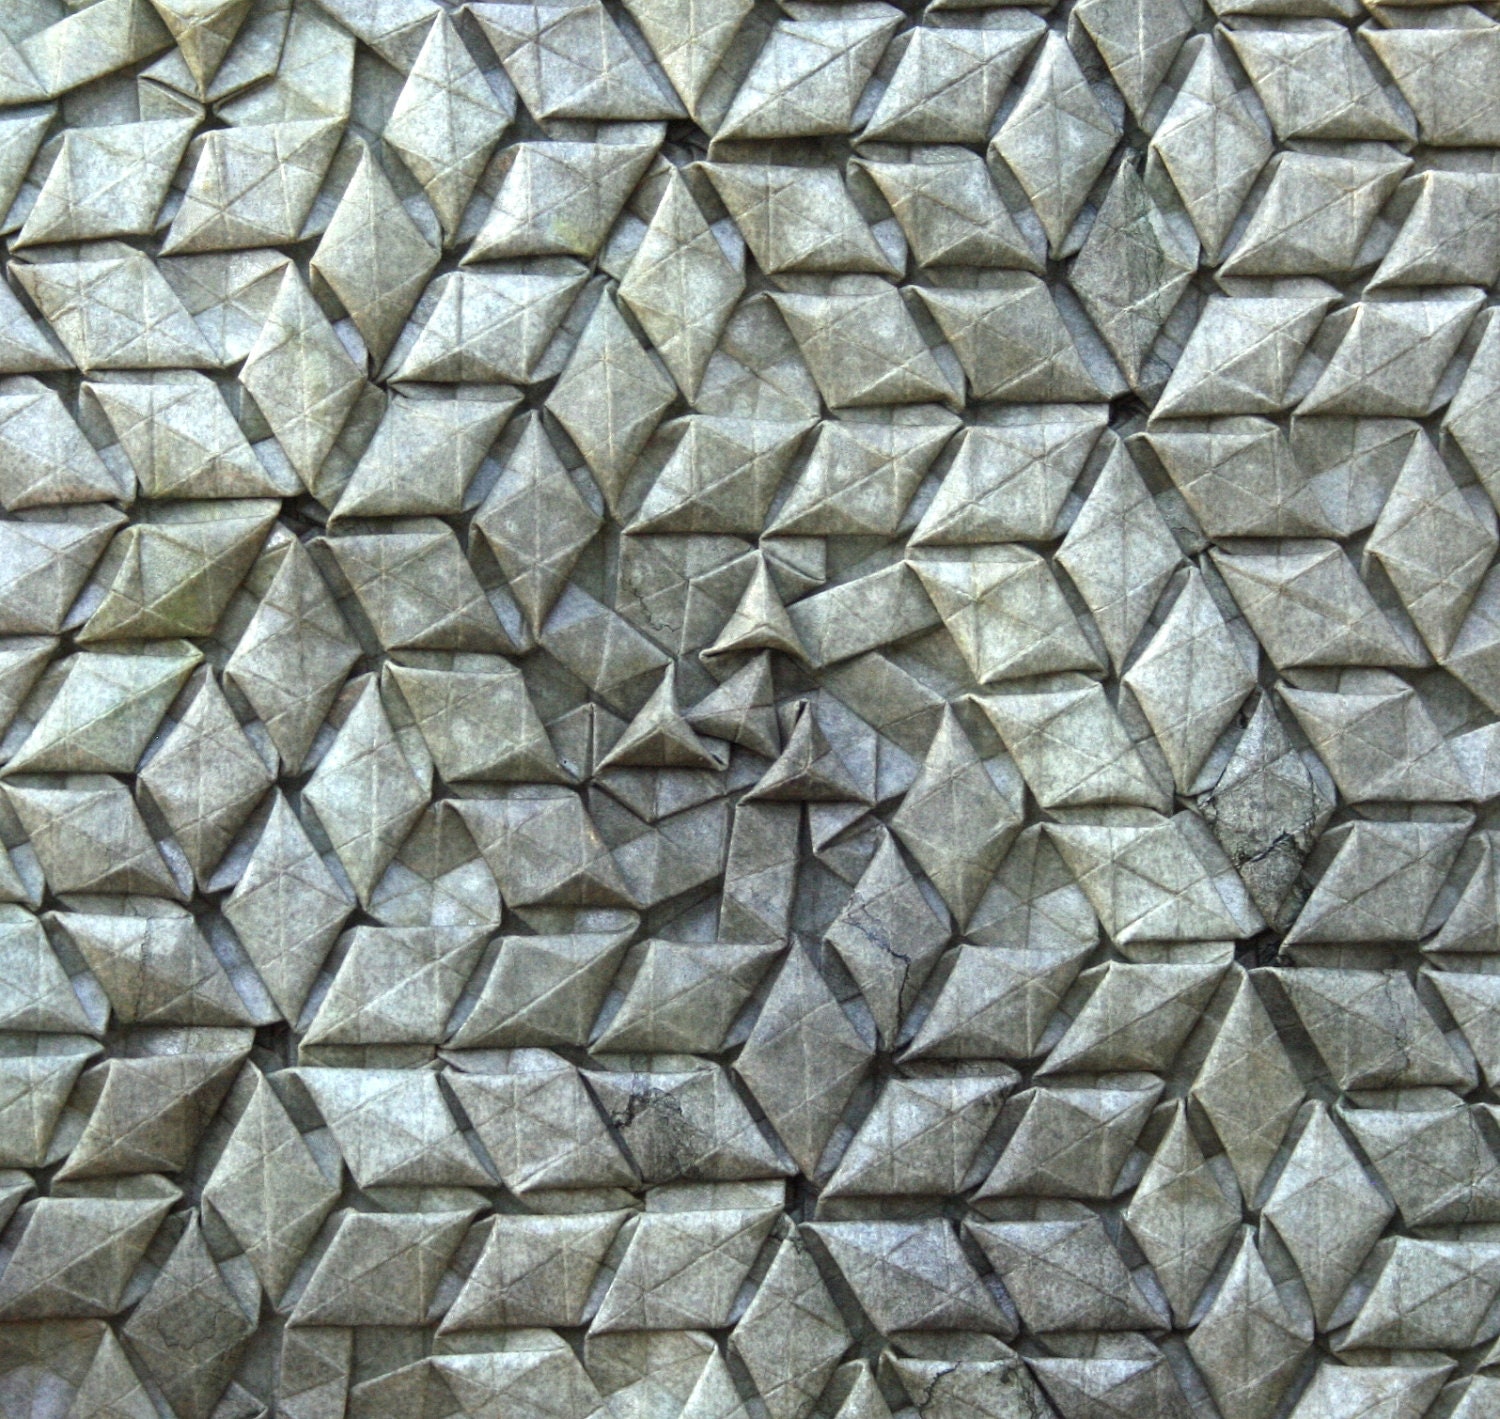 Strange symmetry - complex origami tessellation